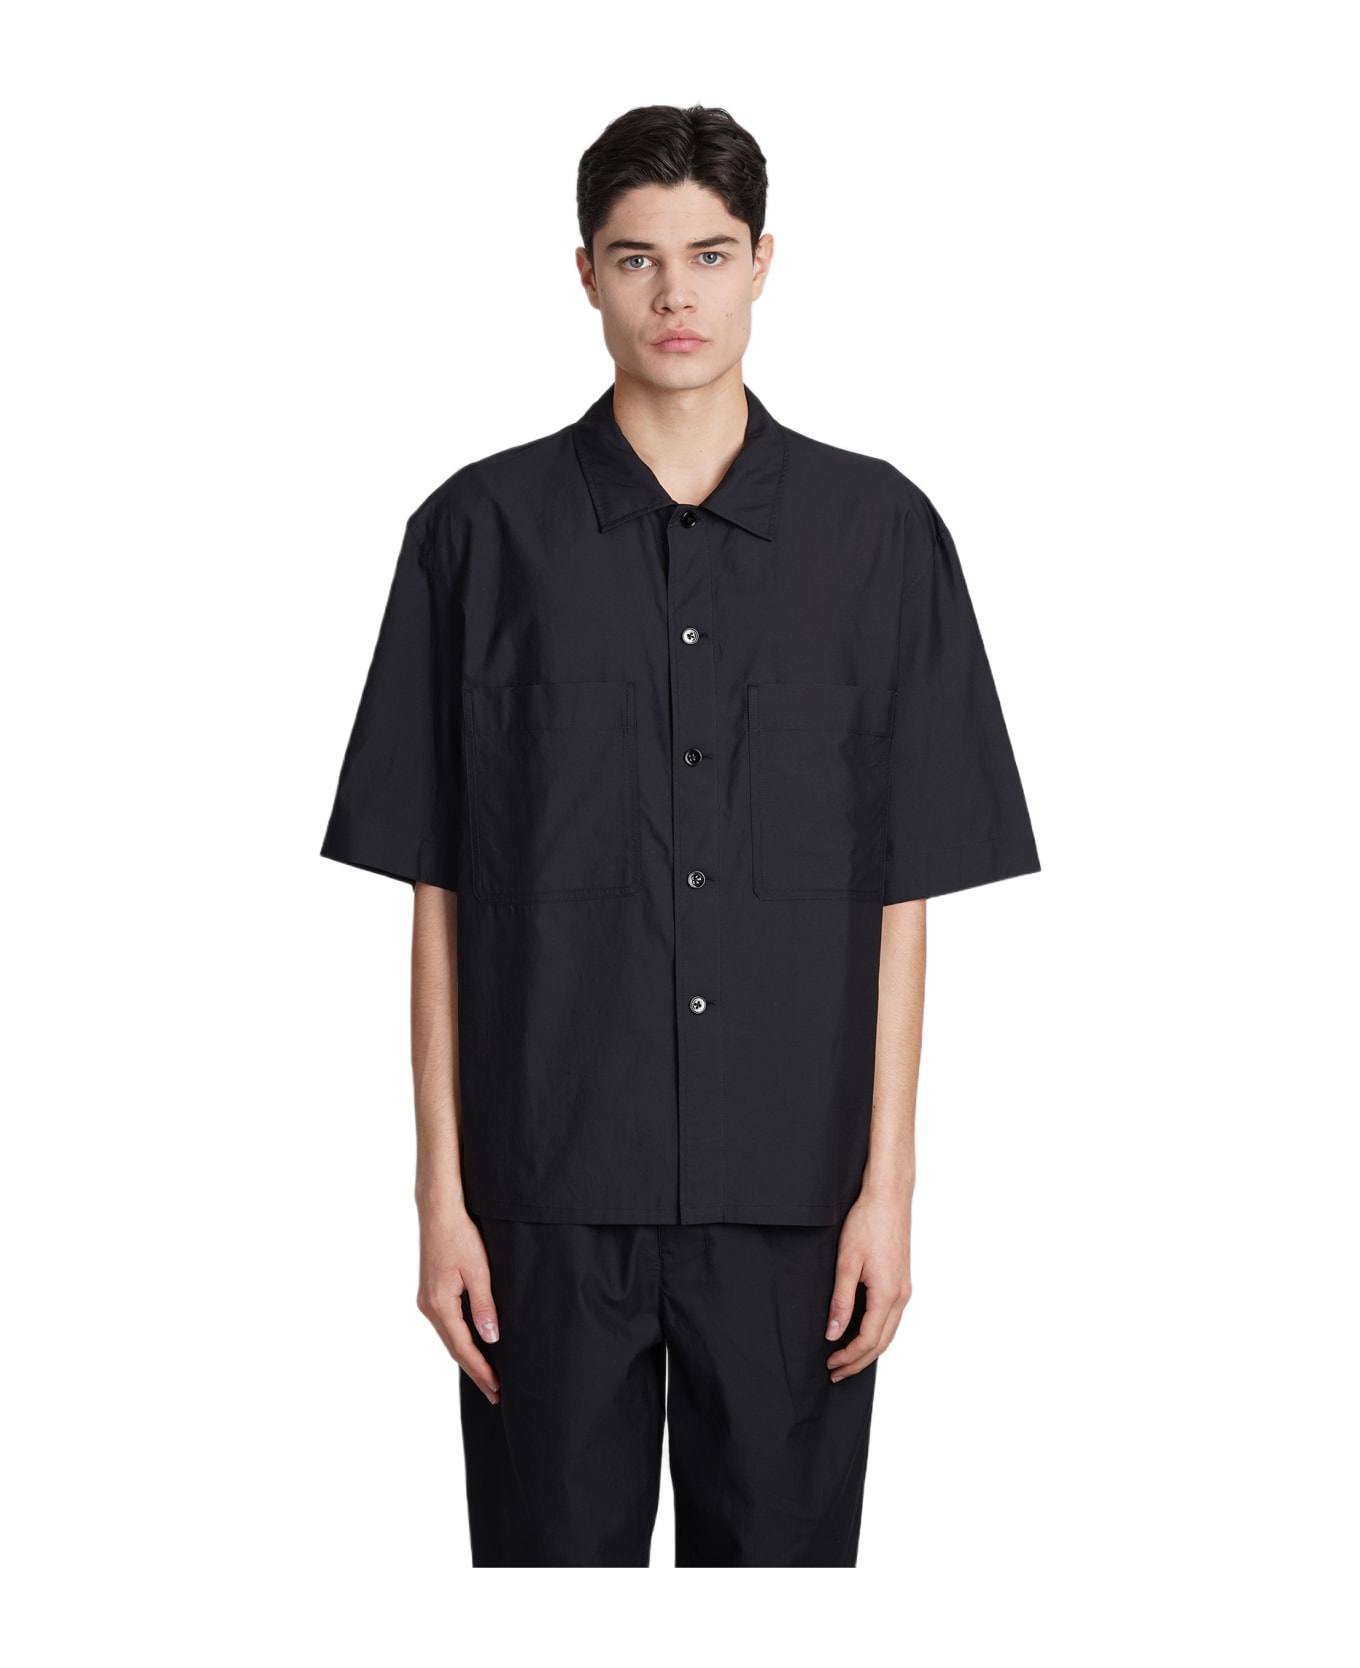 Lemaire Shirt In Black Cotton - black